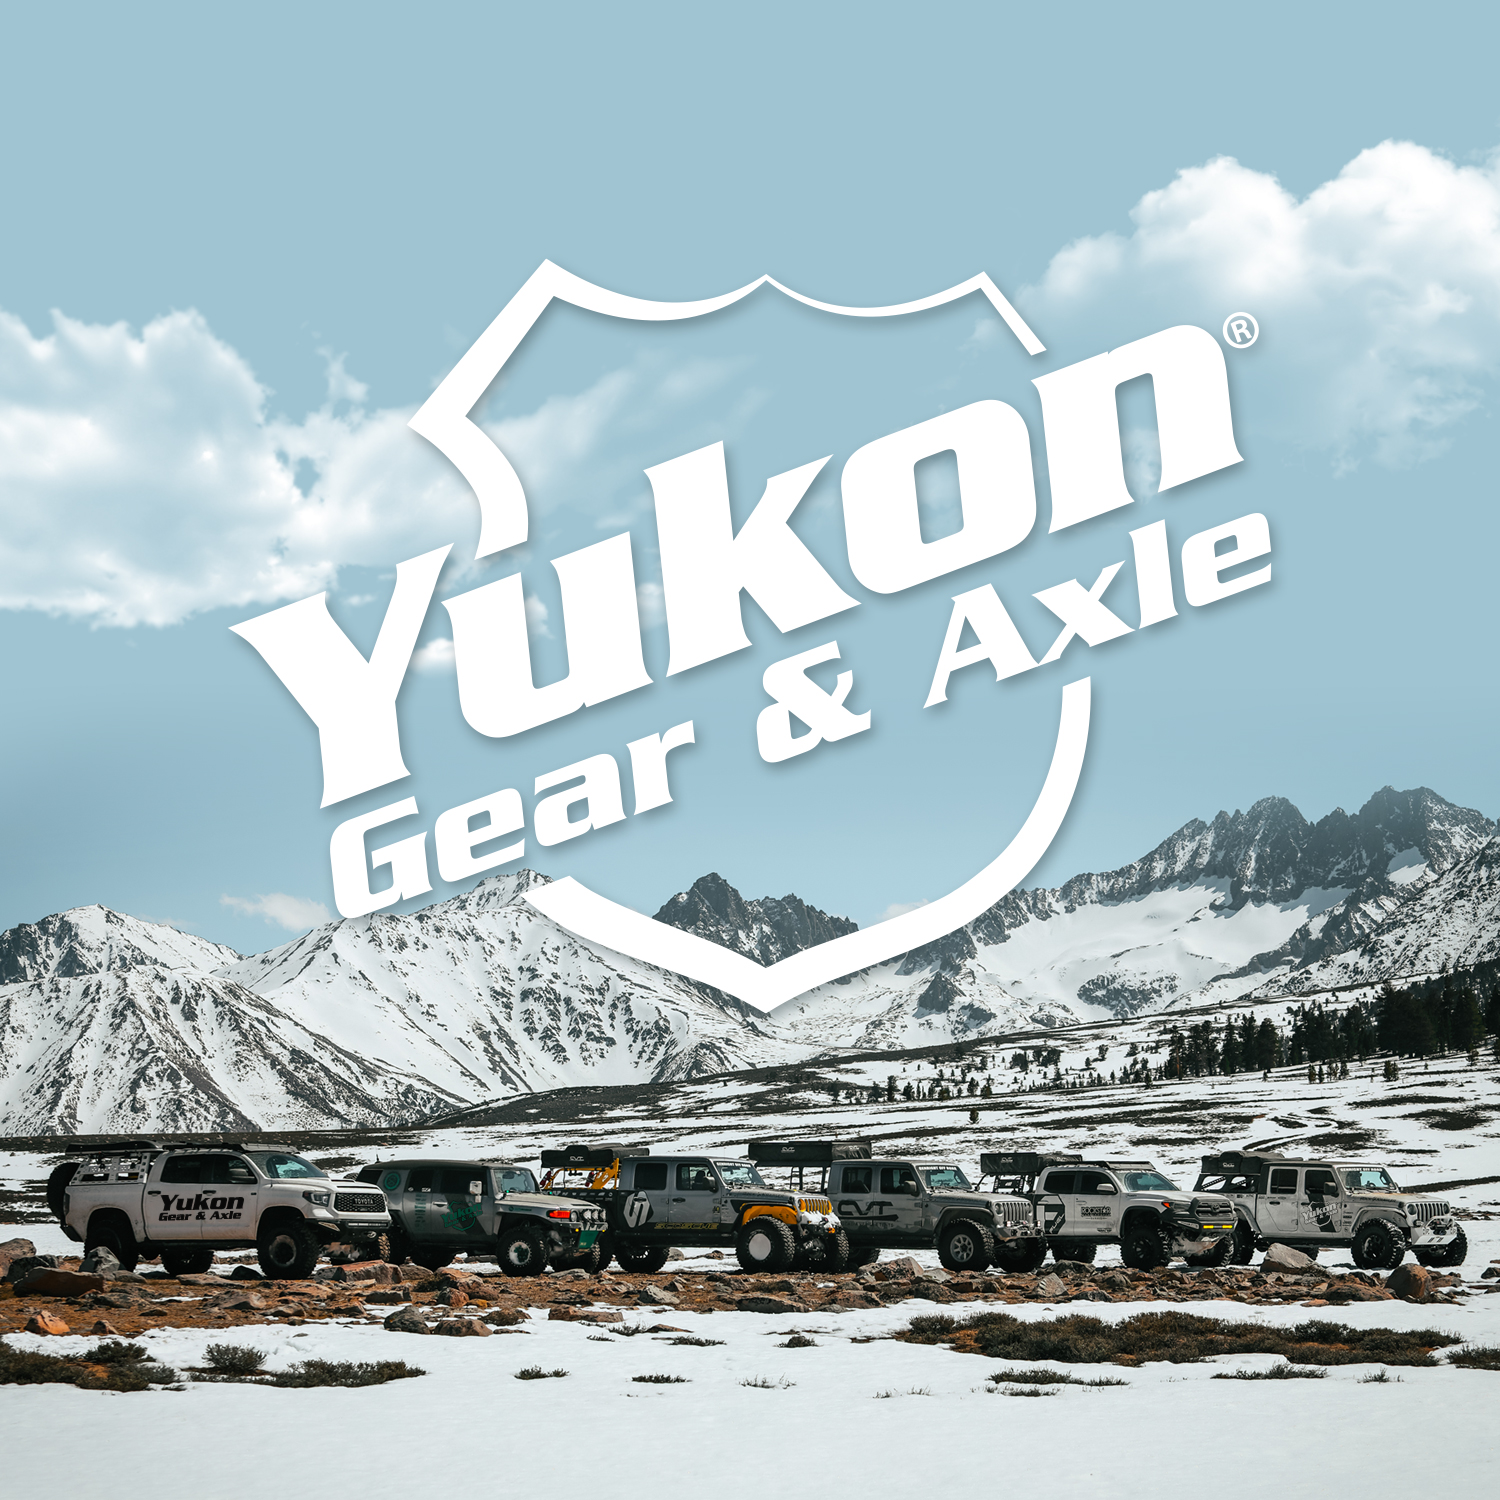 Yukon high performance ring & pinion set, Ford 8.8”, 2015-up F150/Mustang, 4.11 